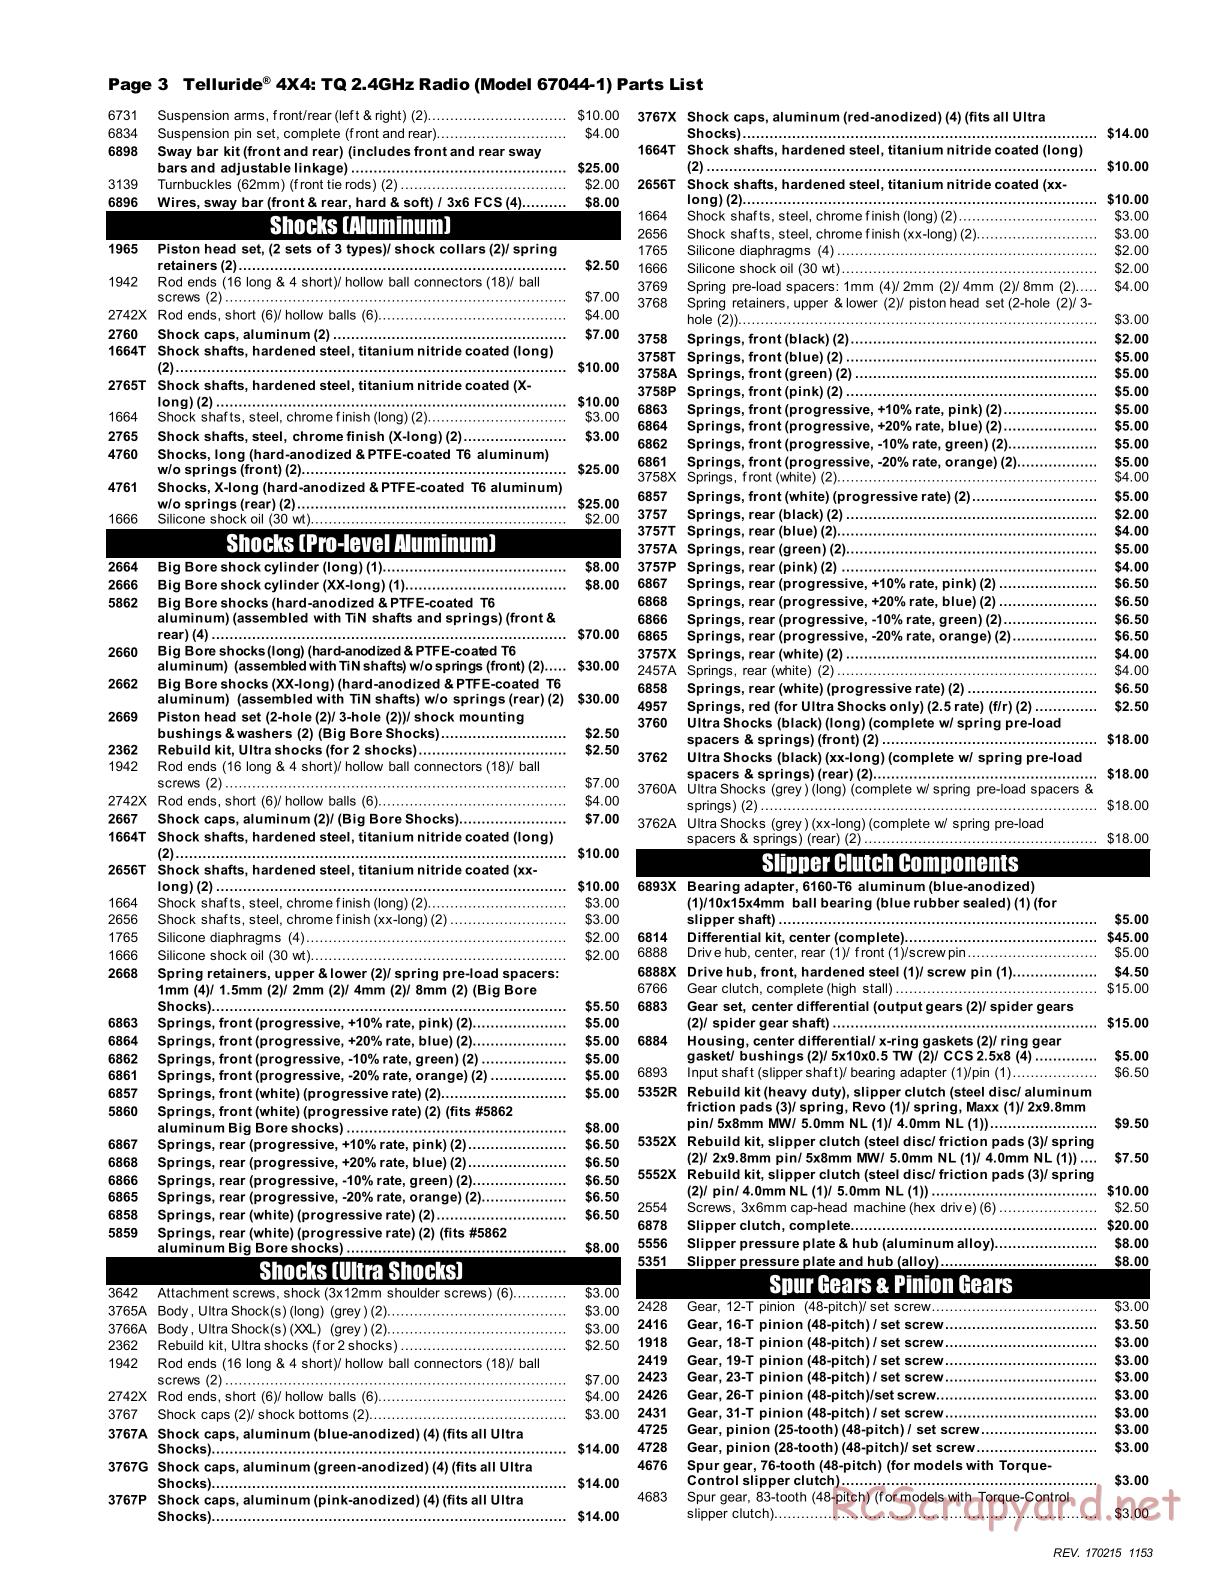 Traxxas - Telluride 4x4 (2015) - Parts List - Page 3